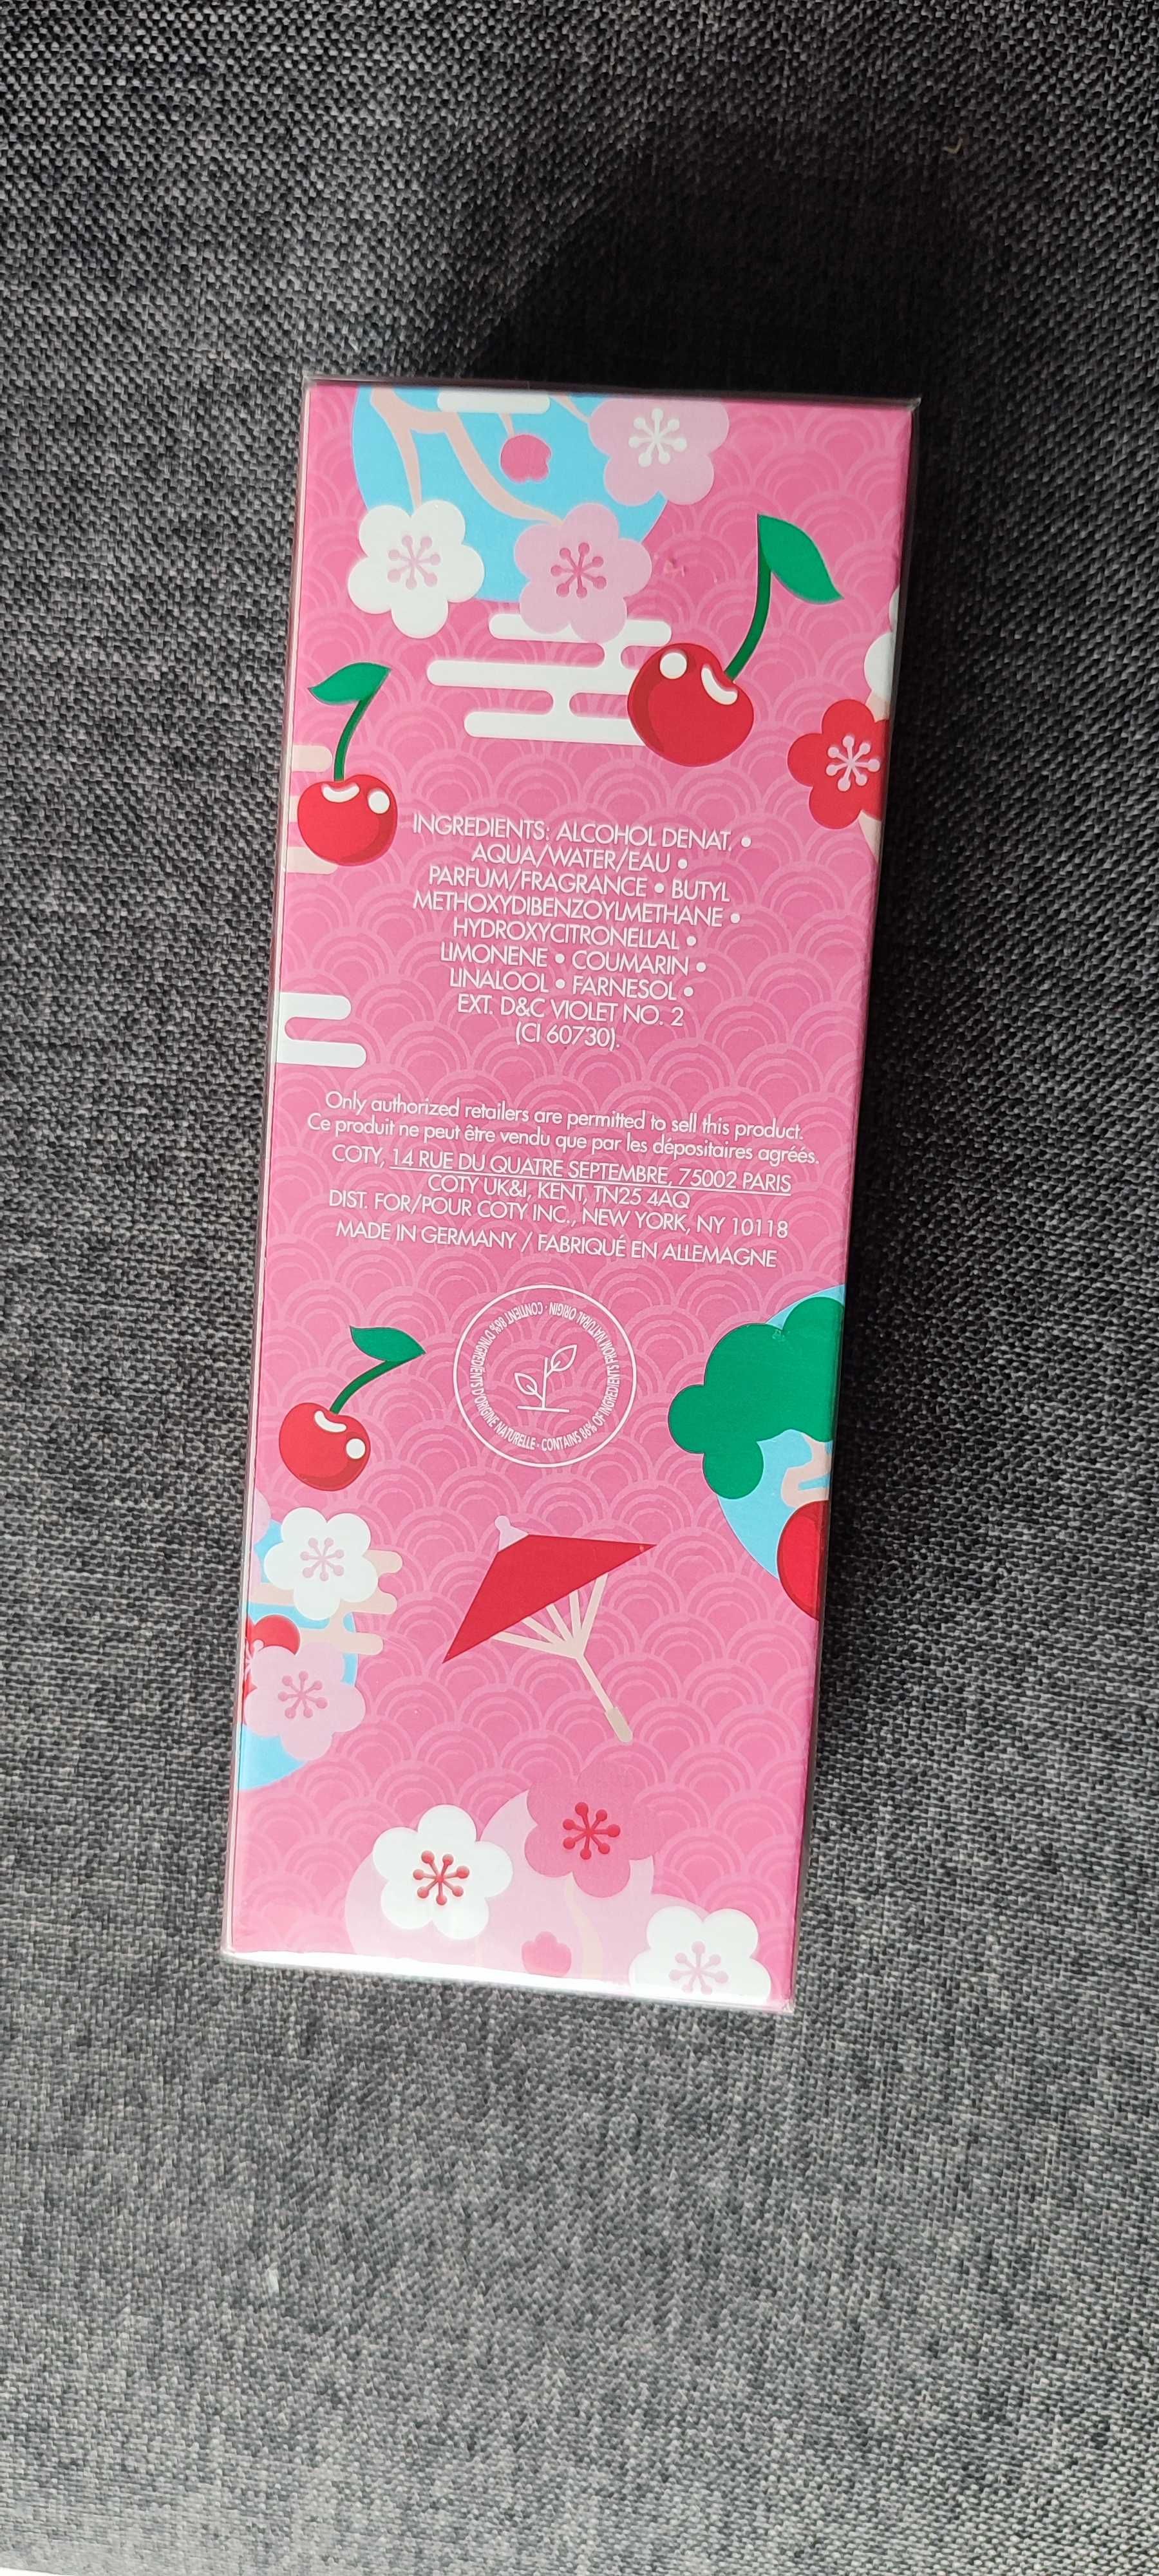 Дамски парфюм Escada Cherry in Japan Limited Edition